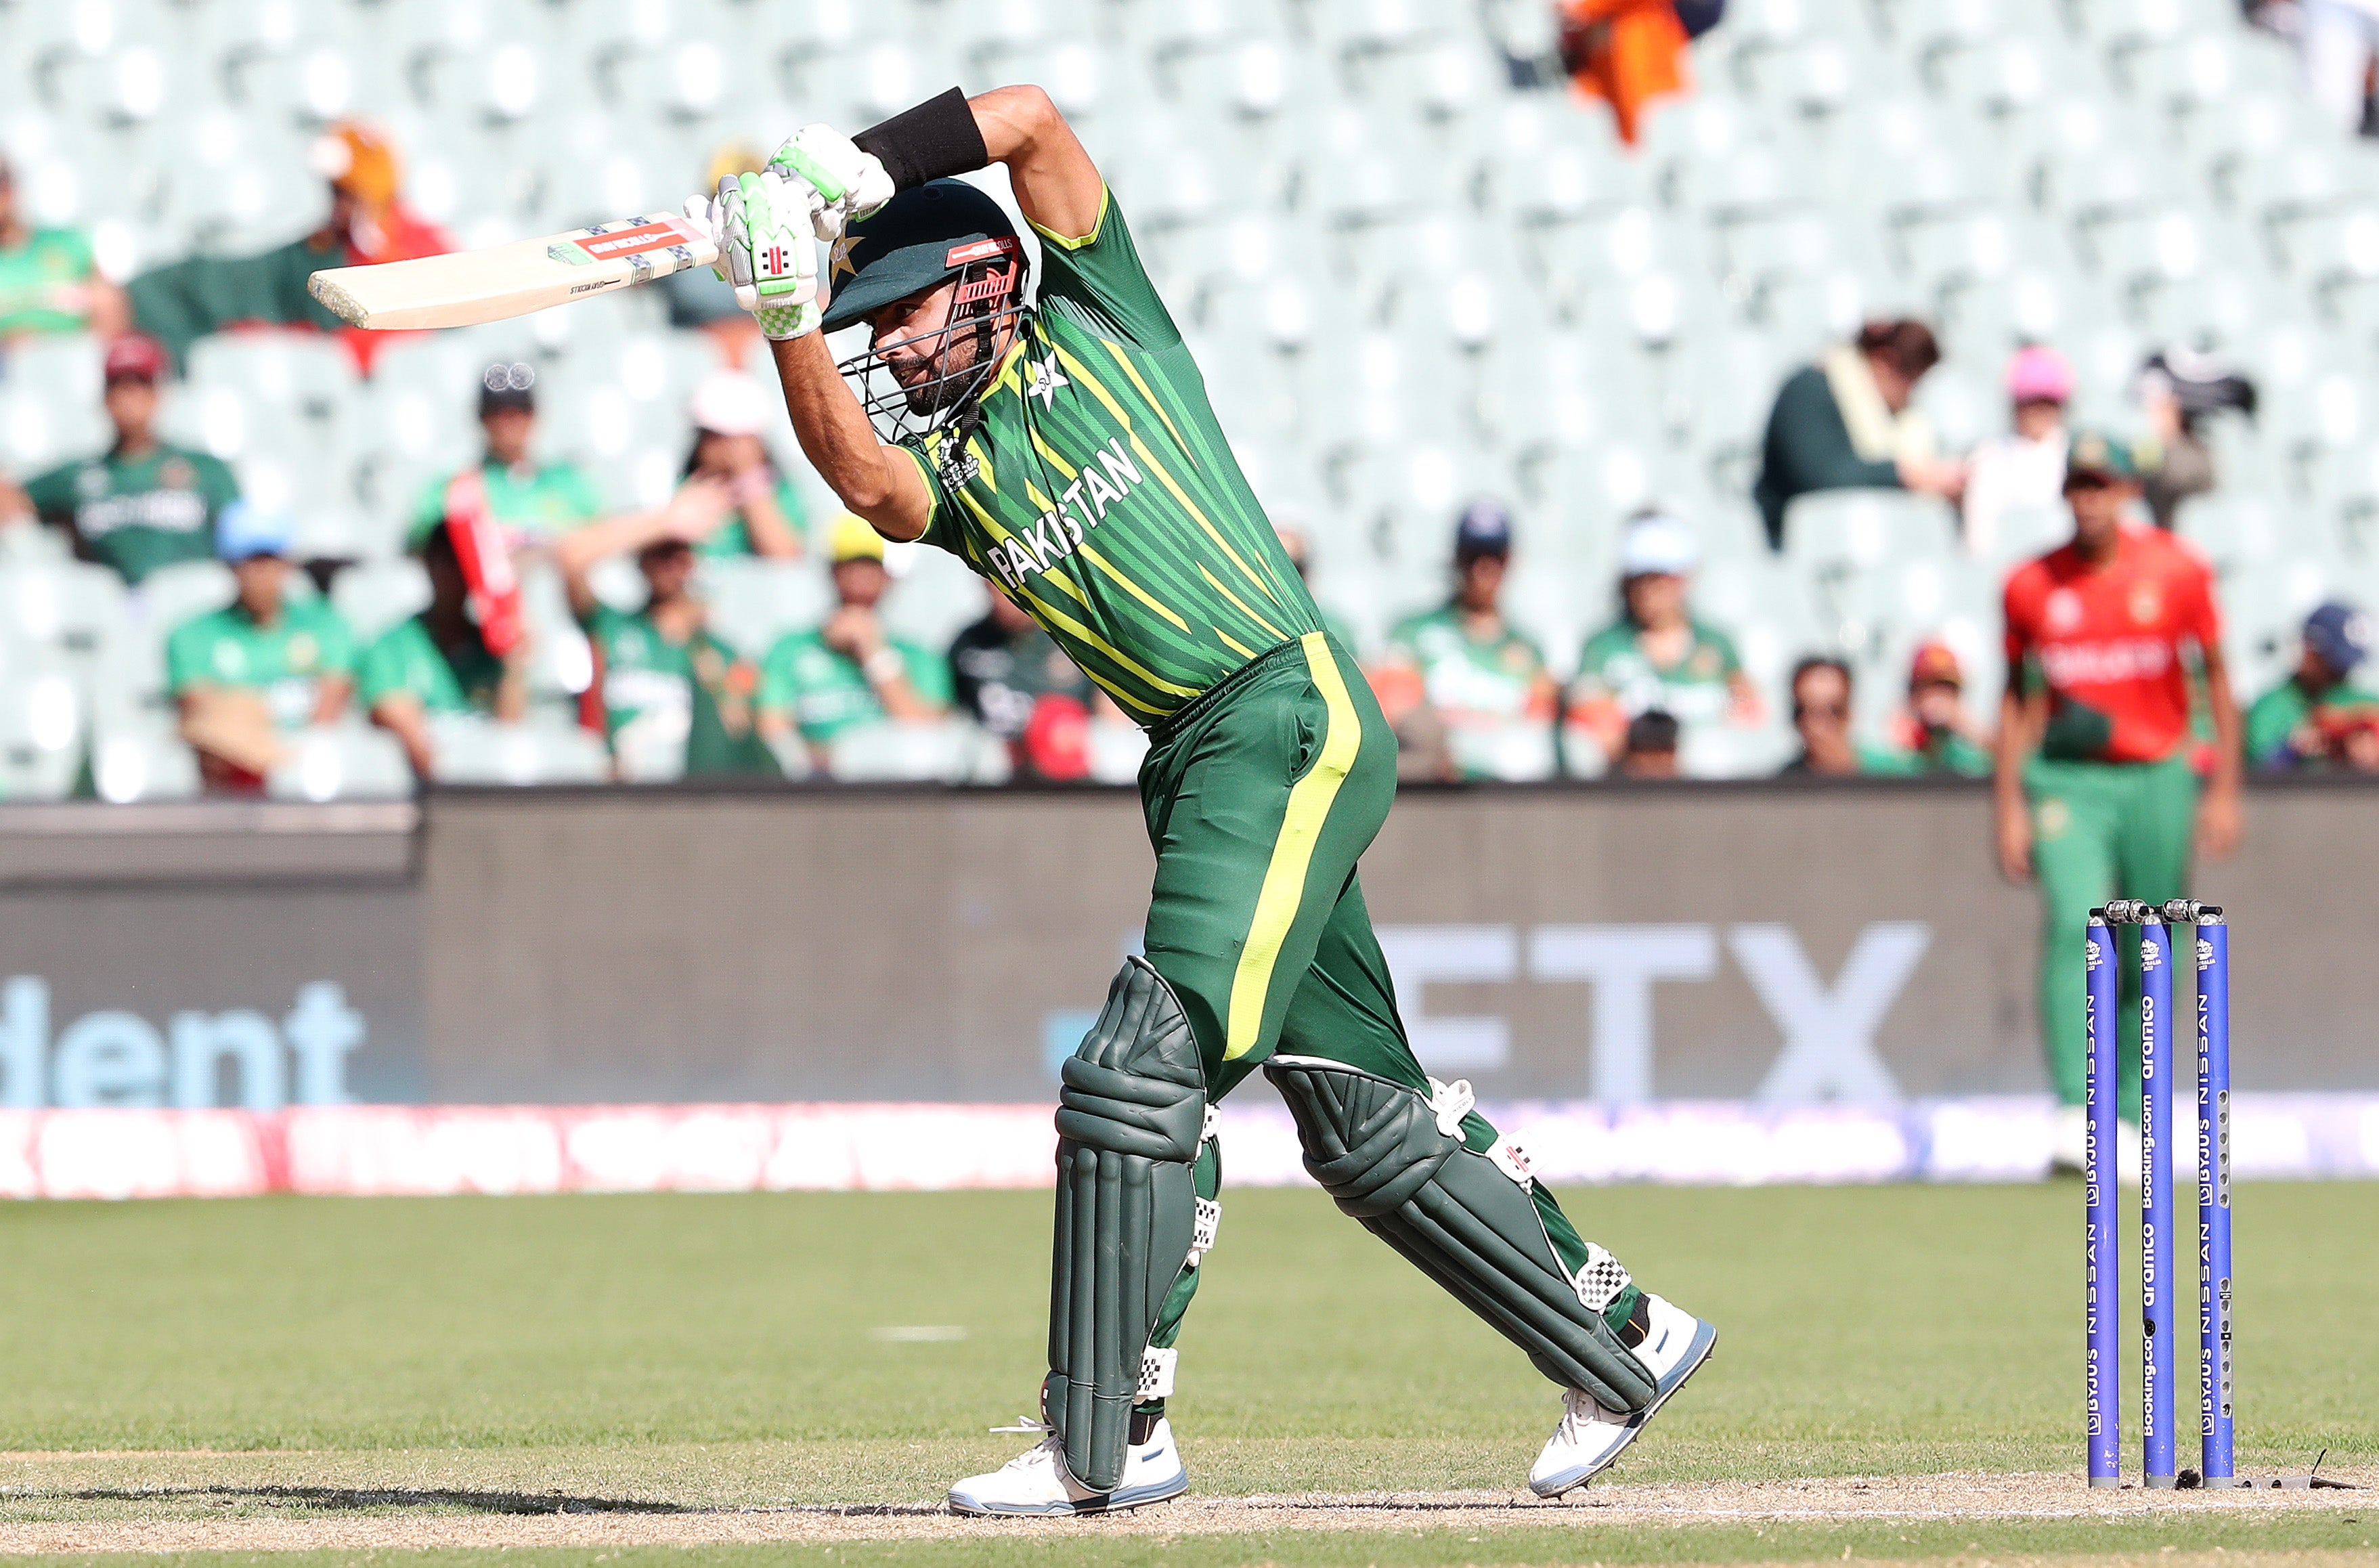 Pakistan’s captain has yet to find top gear in Australia